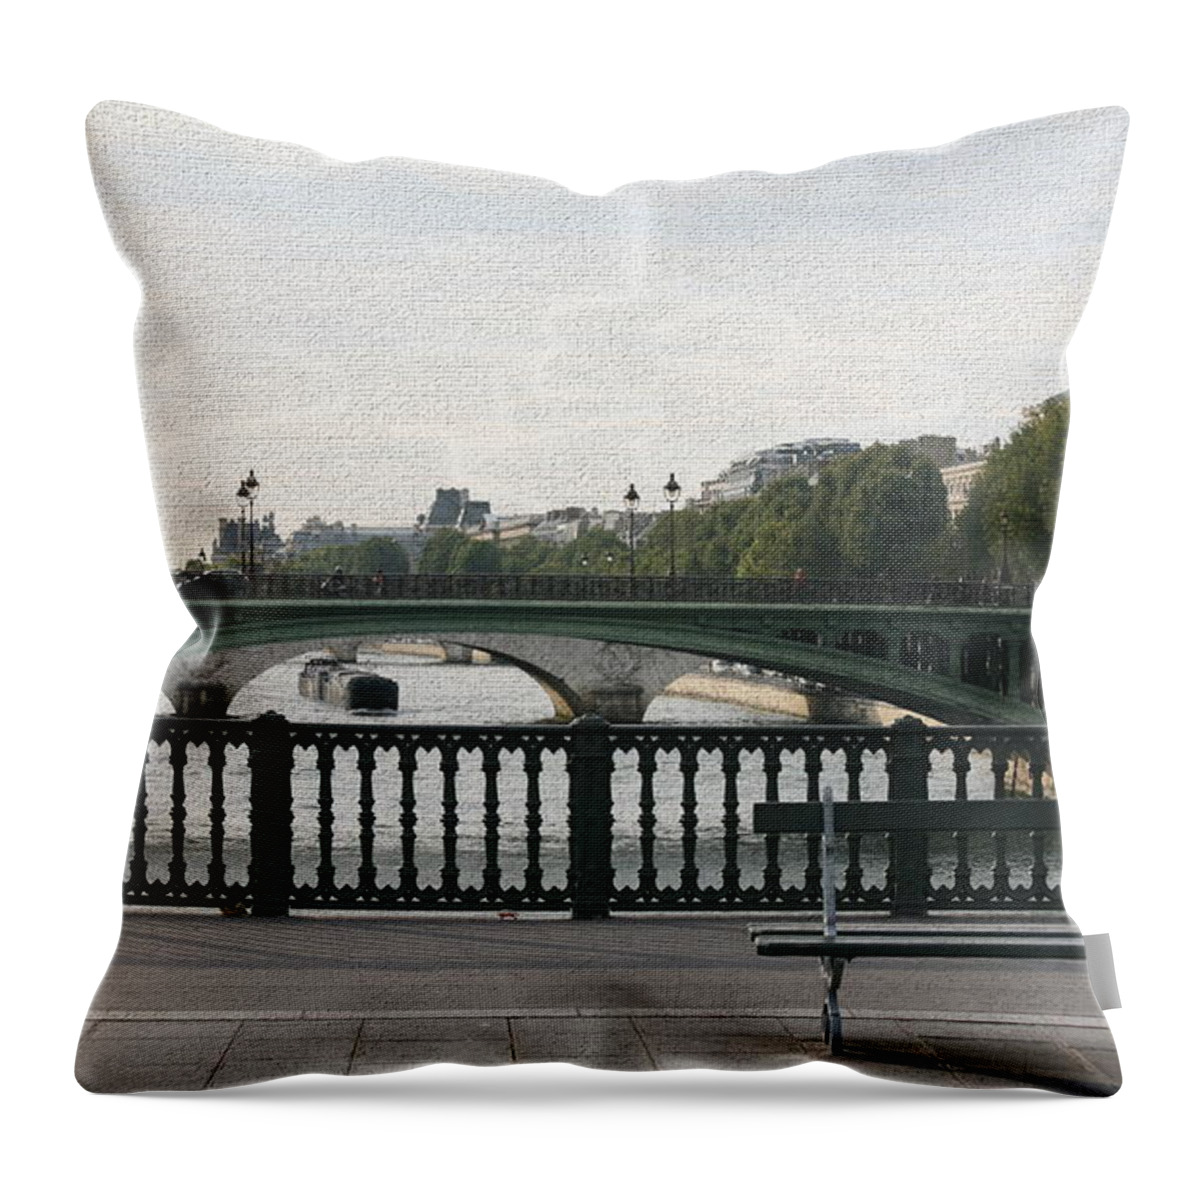  Paris Throw Pillow featuring the digital art Seine River Paris Bridge Man Bench Texture Effect by Chuck Kuhn